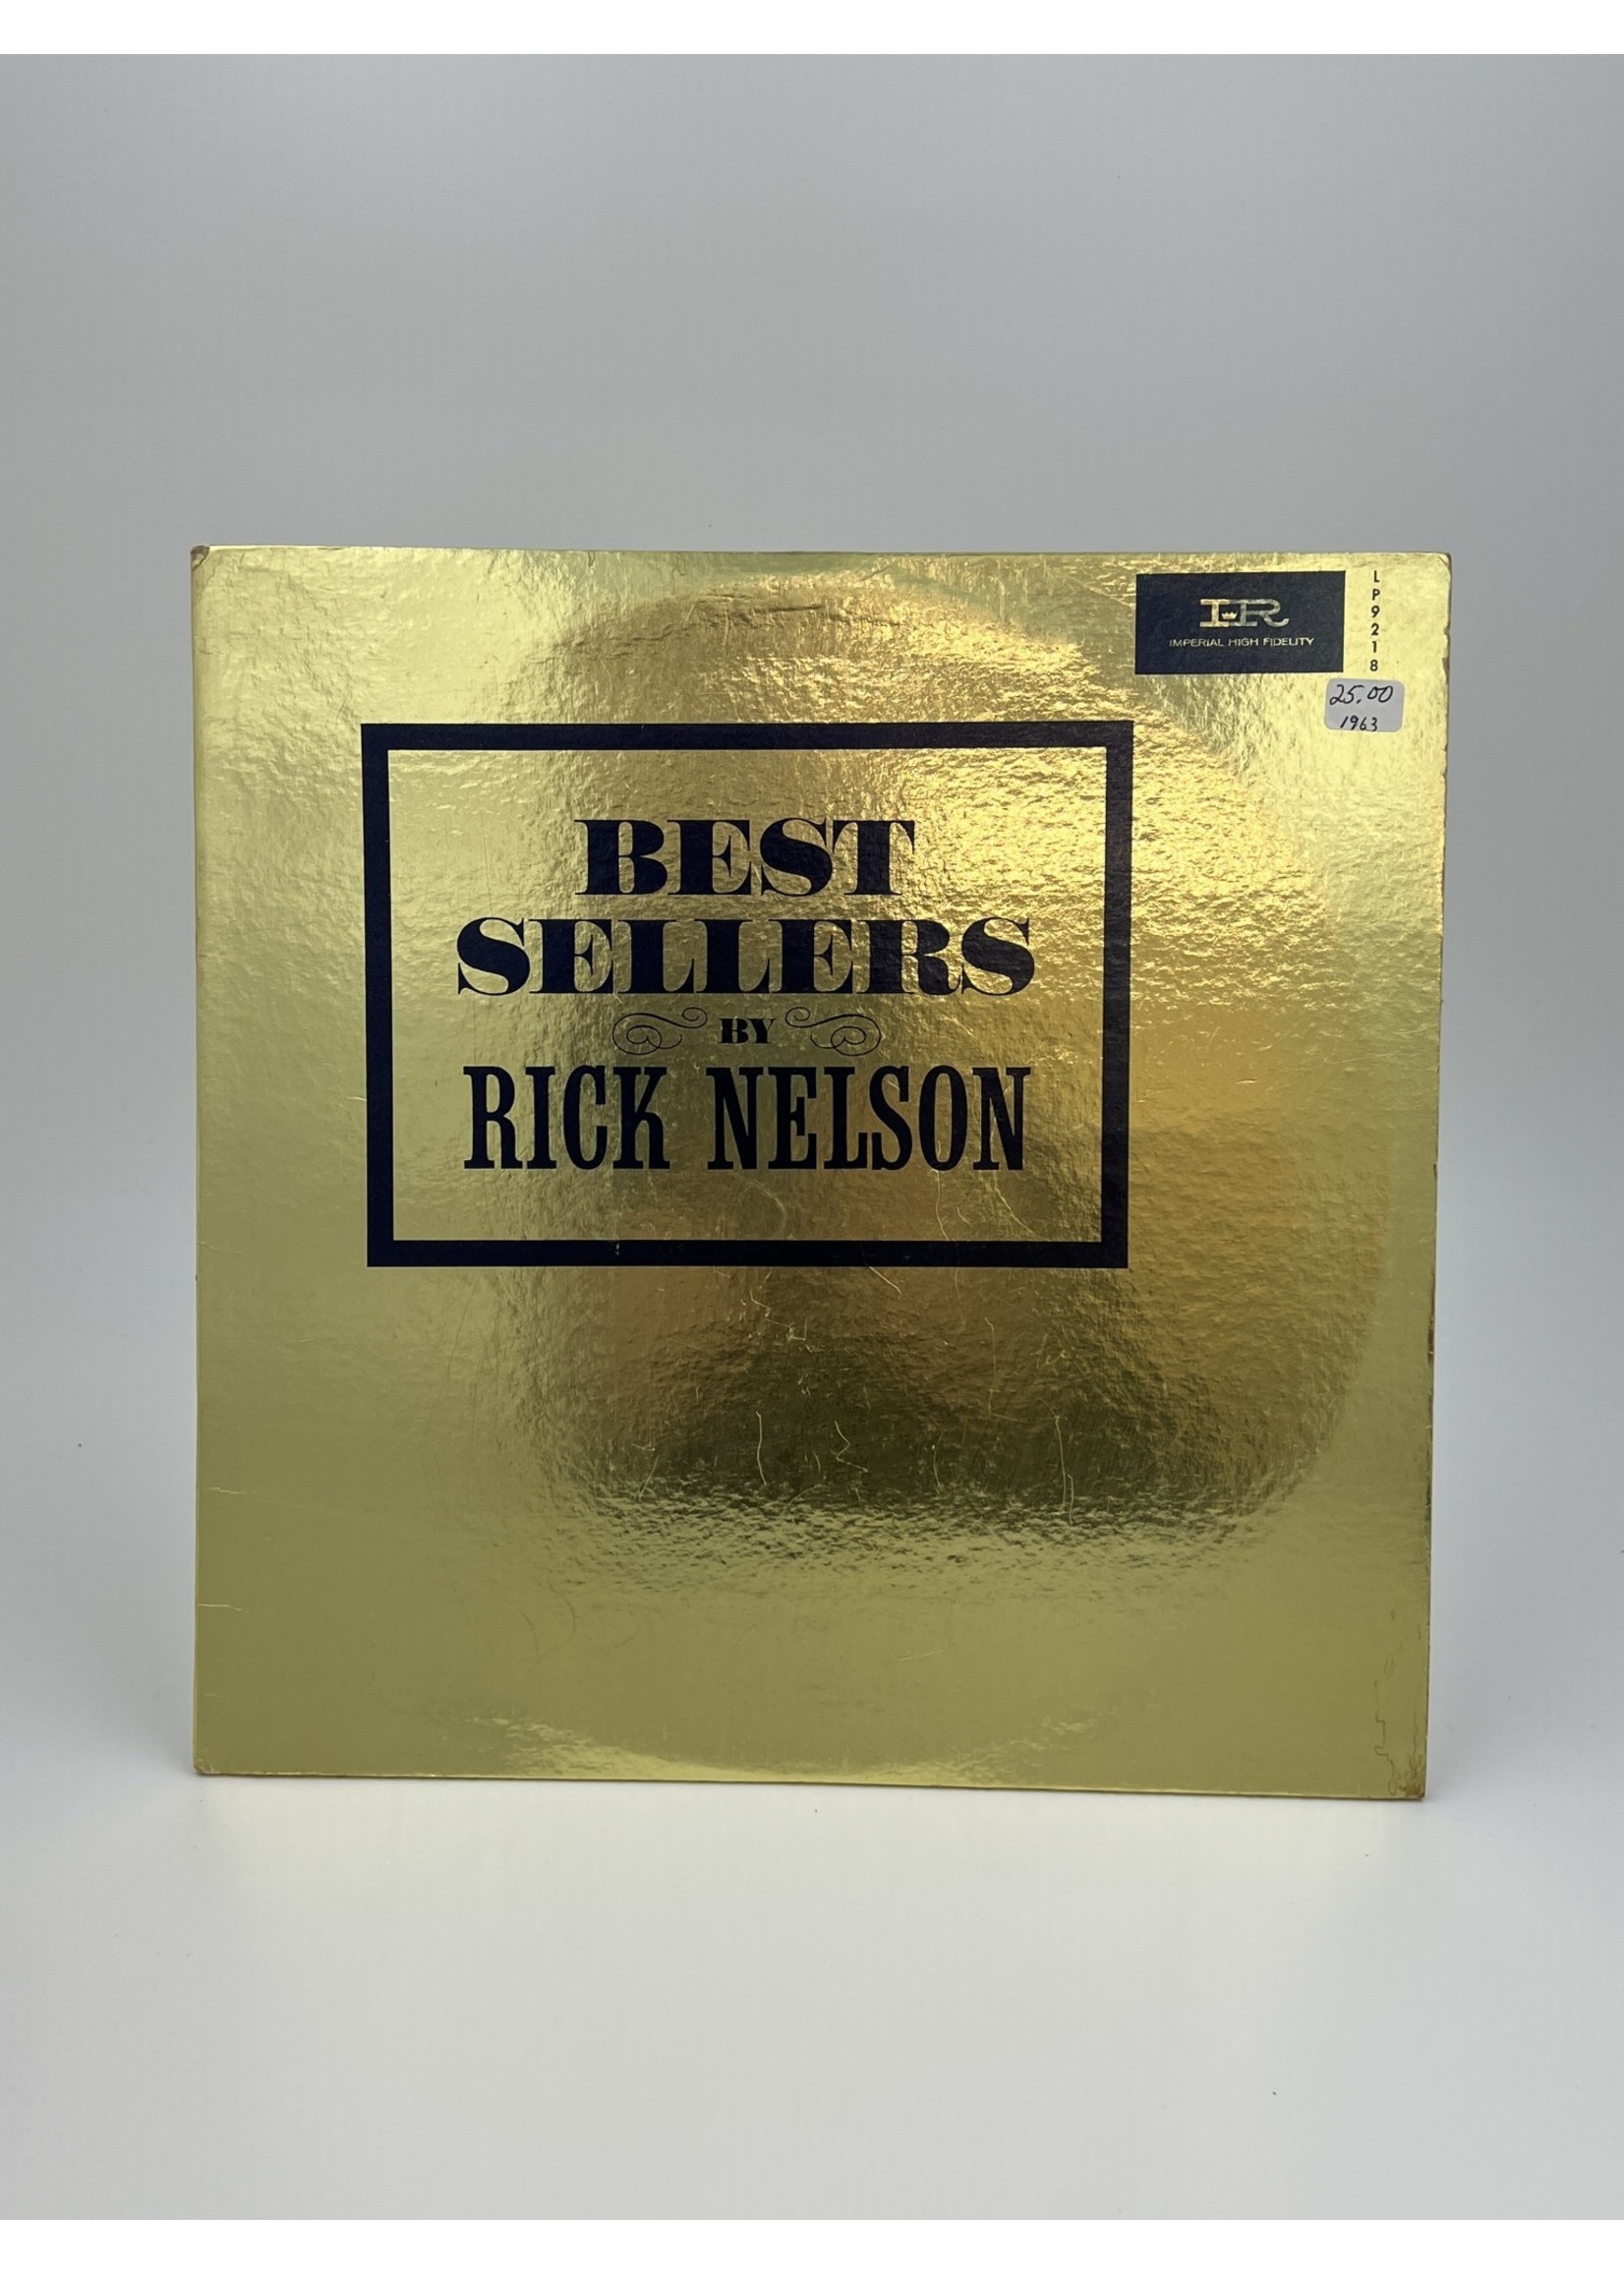 LP Rick Nelson Best Sellers LP Record